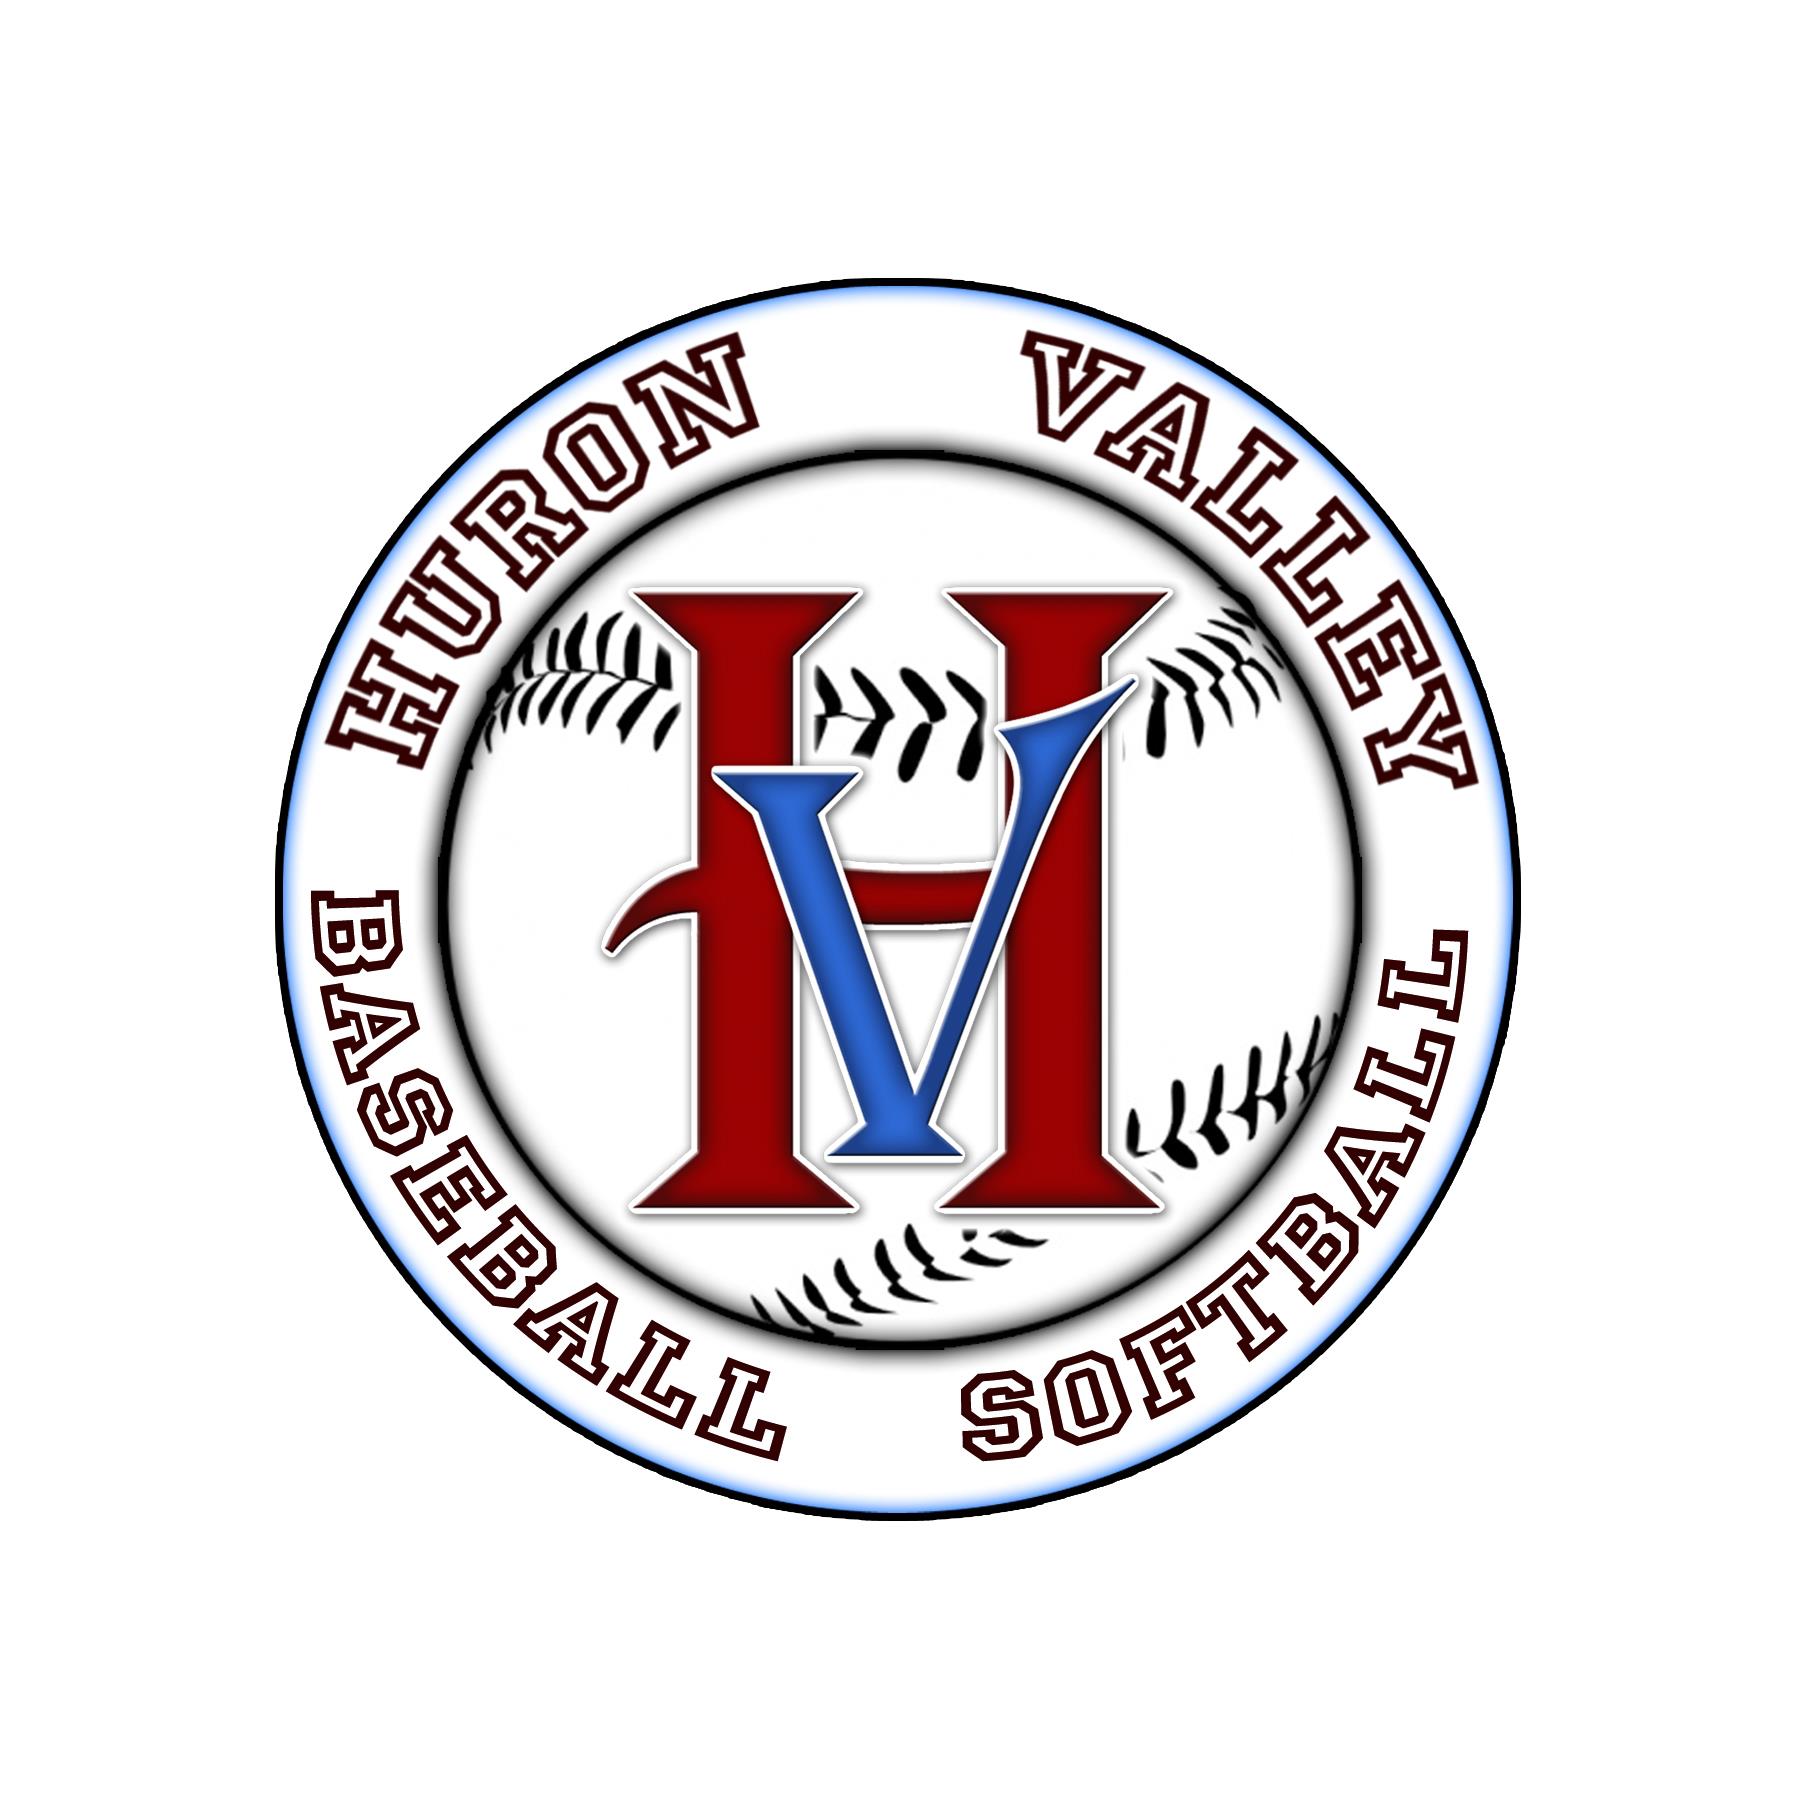 Huron Valley Youth Baseball and Softball League